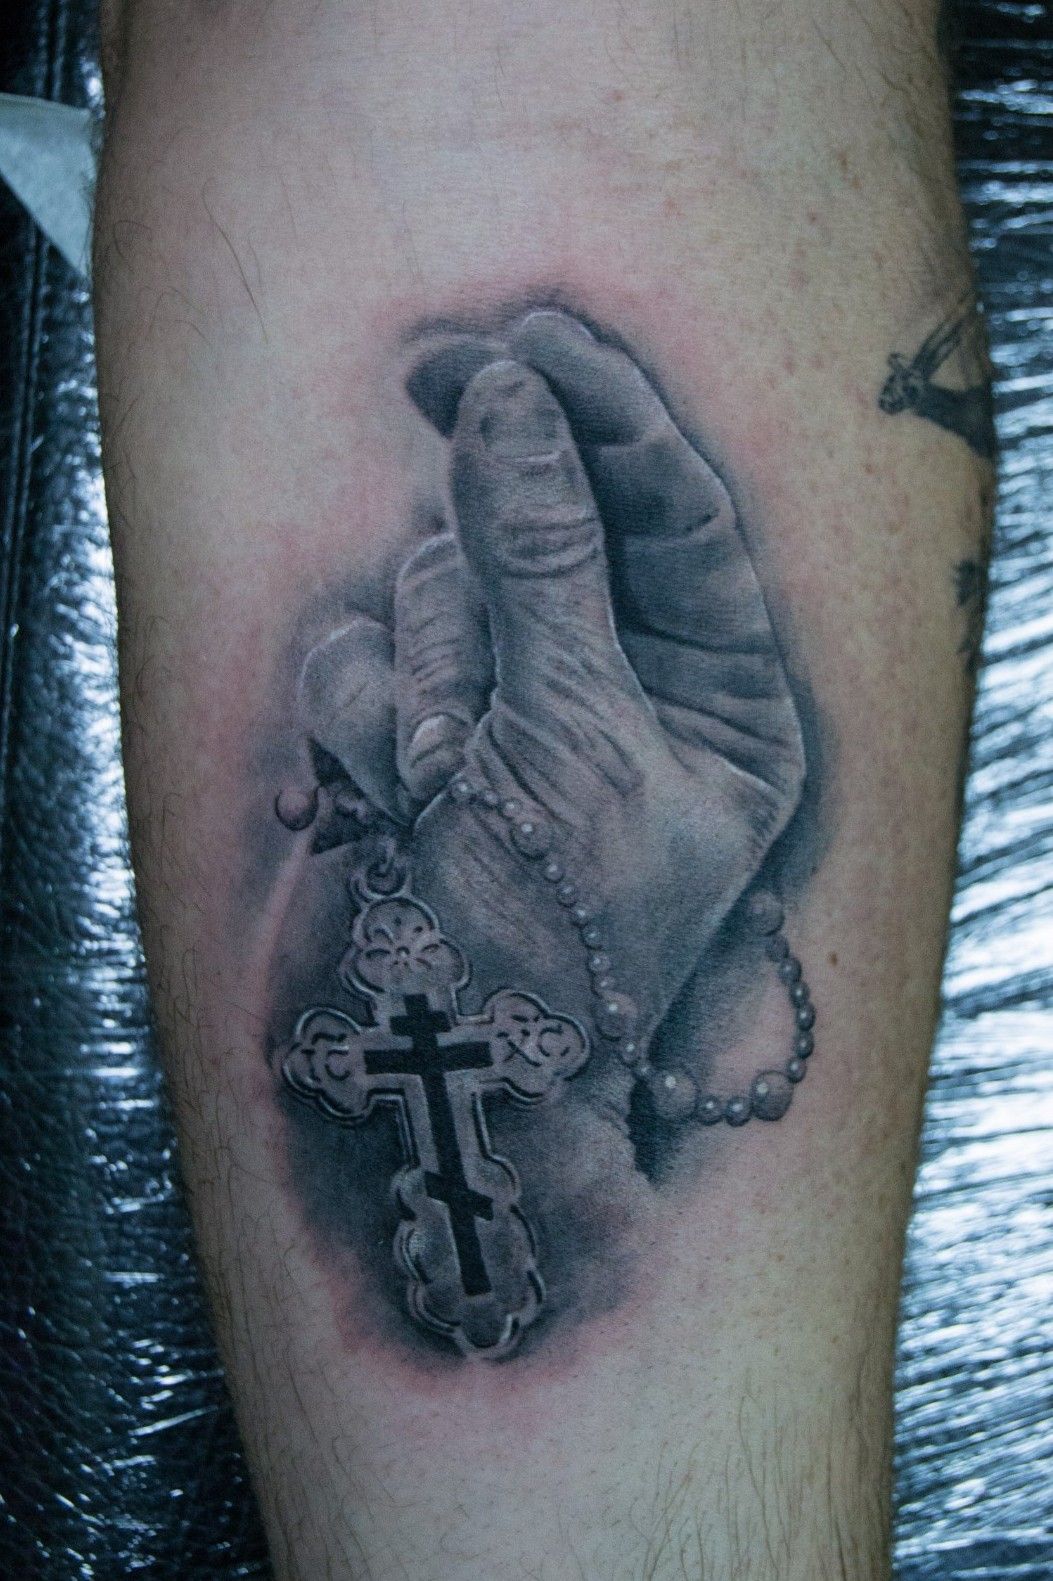 Josh ink tattoo  Greek Orthodox double headed eagle  joshinktattoo at  honeyinknewcastle  Facebook